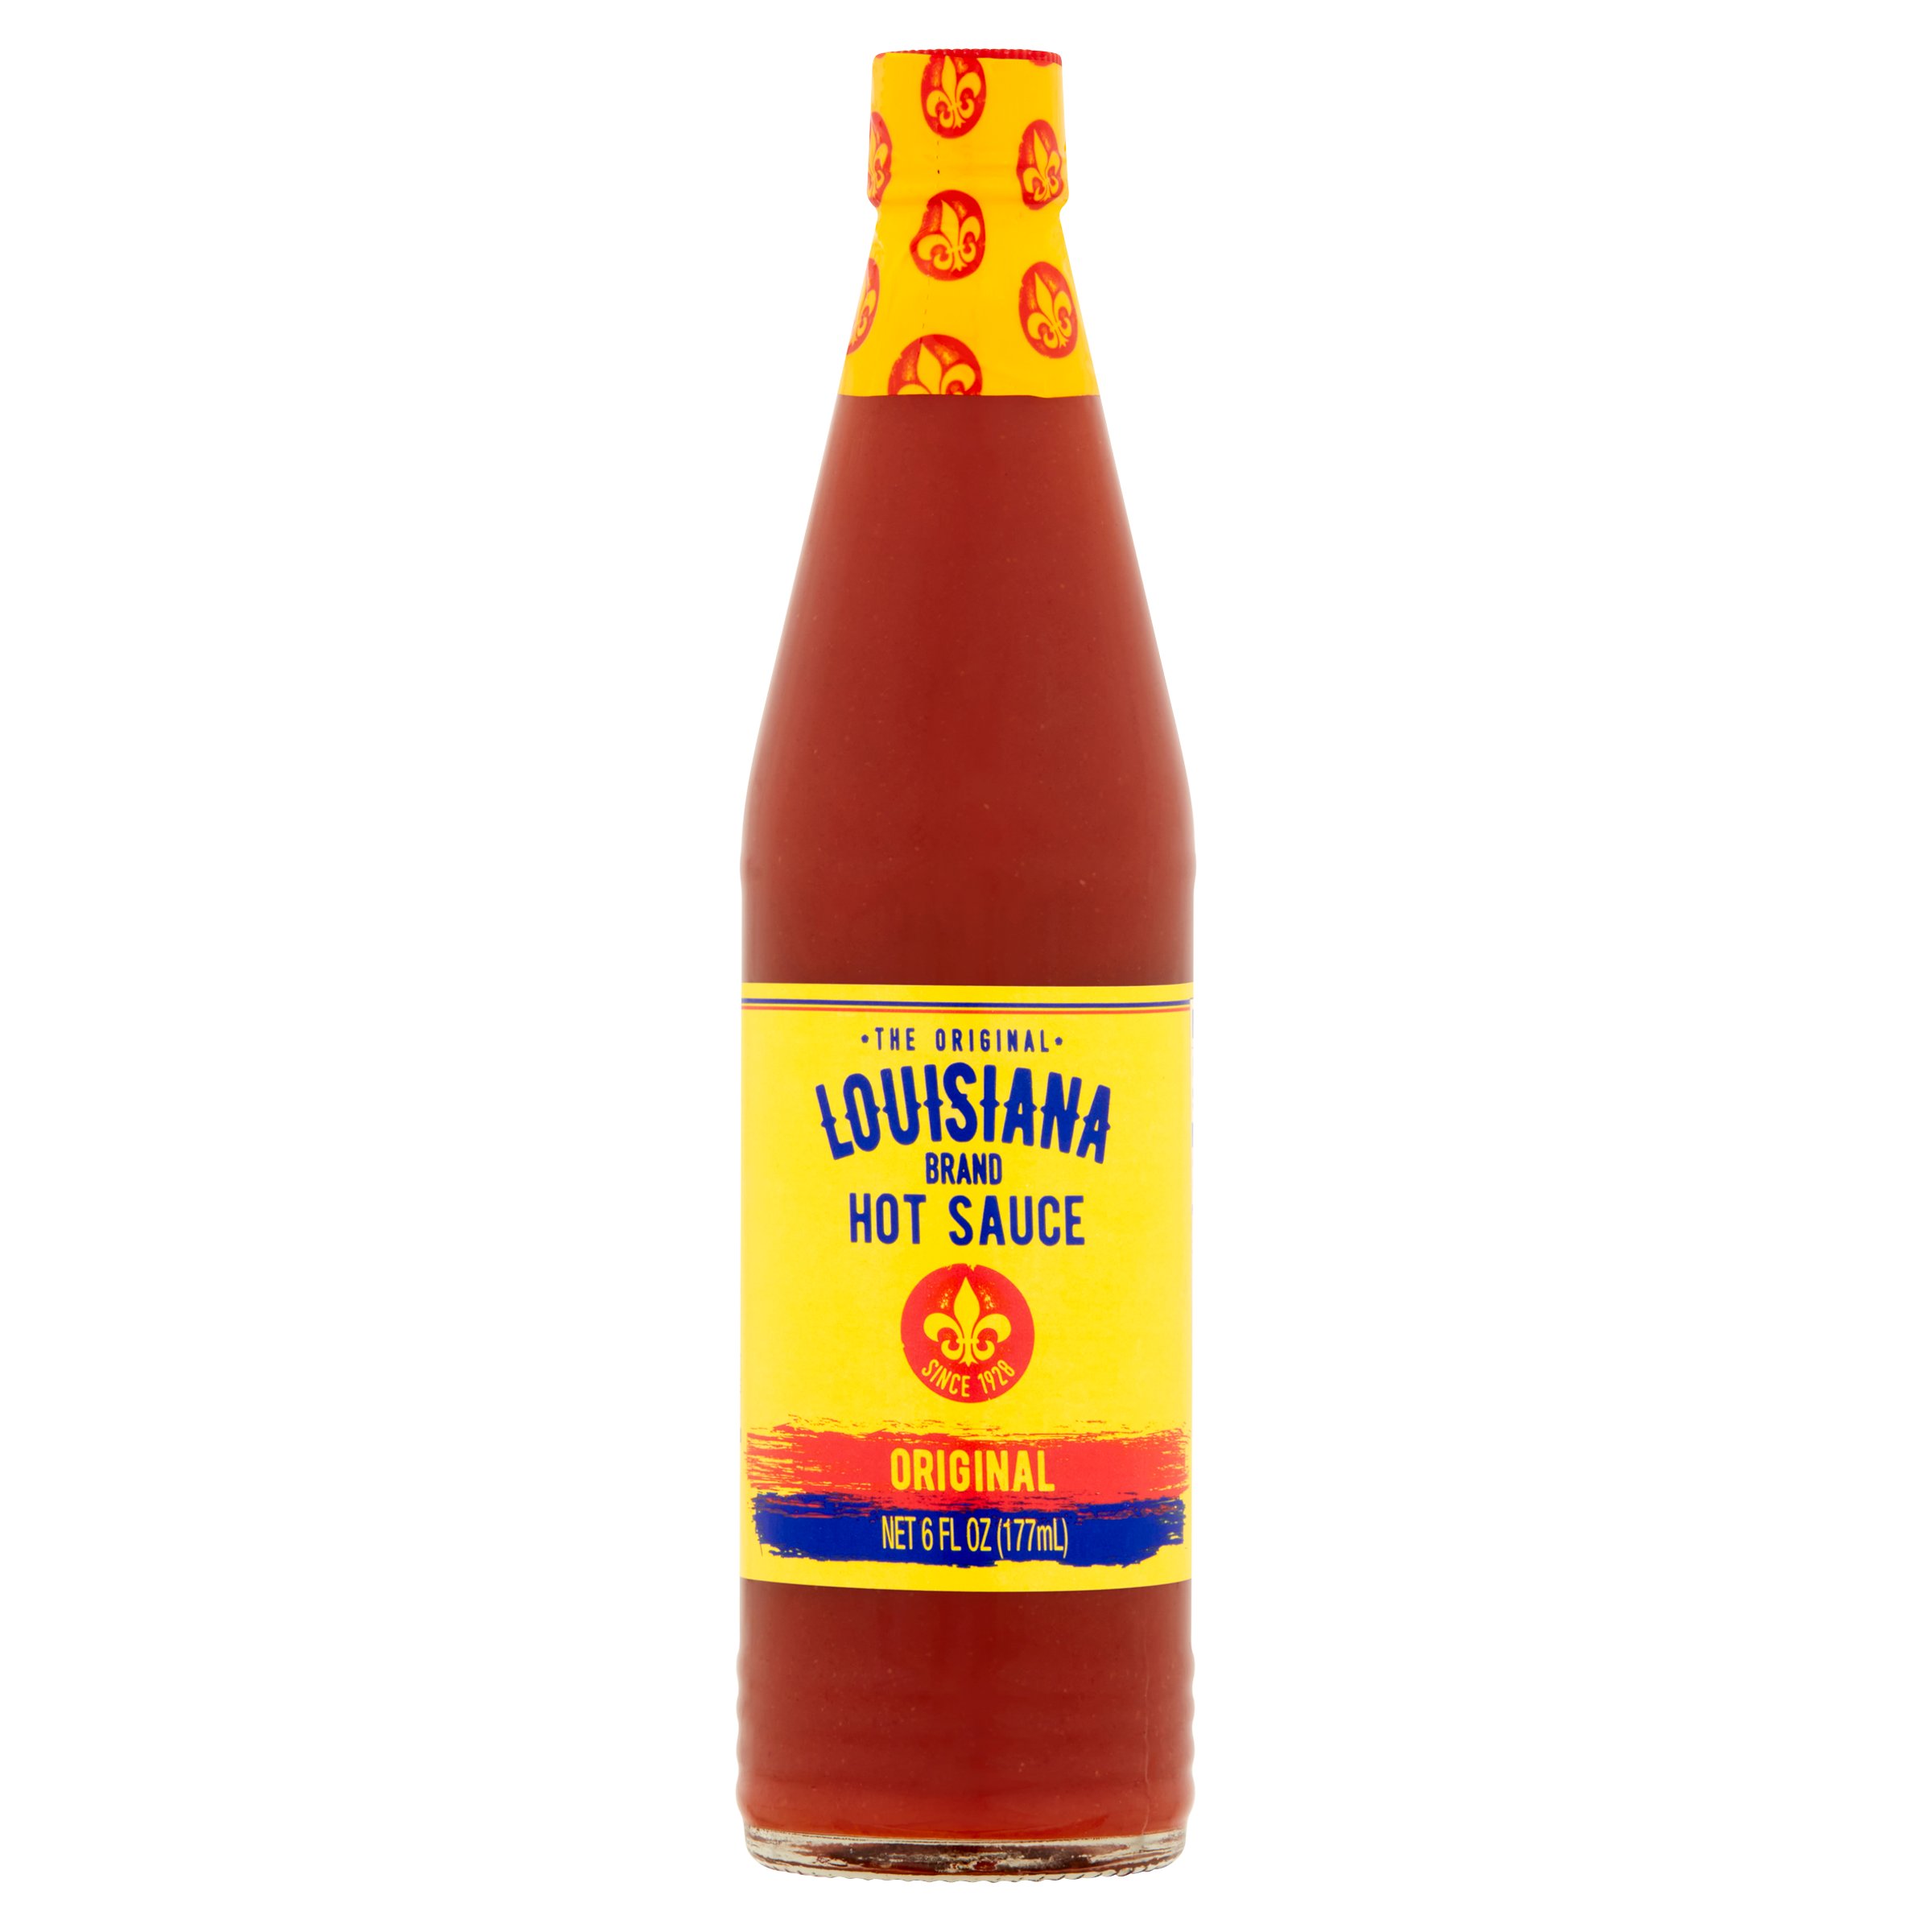 Louisiana Supreme Chicken Wing Sauce, Condiments, Sauces & Marinades